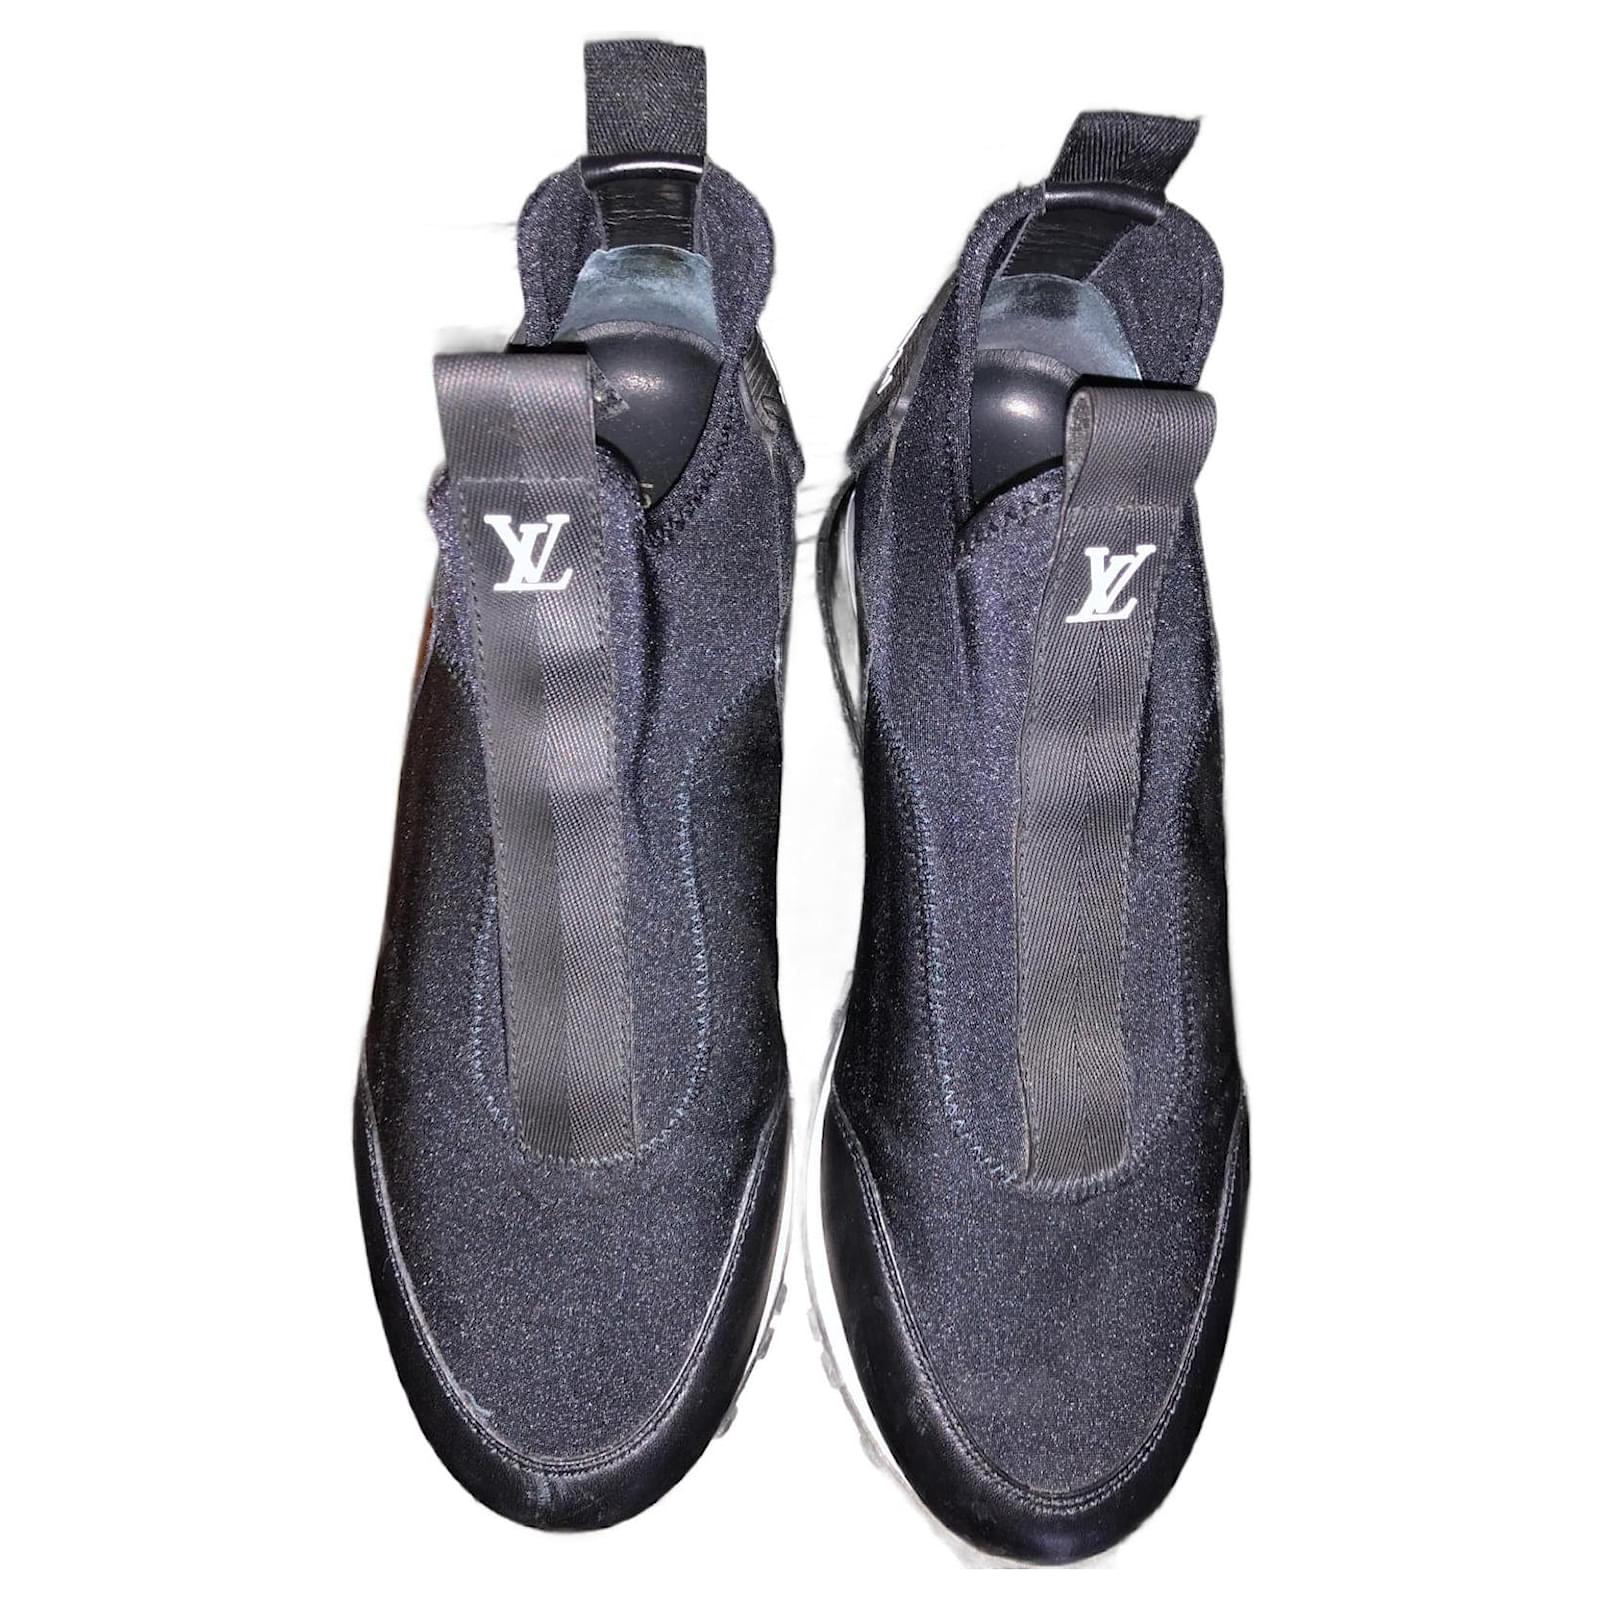 Run away leather trainers Louis Vuitton Grey size 36.5 EU in